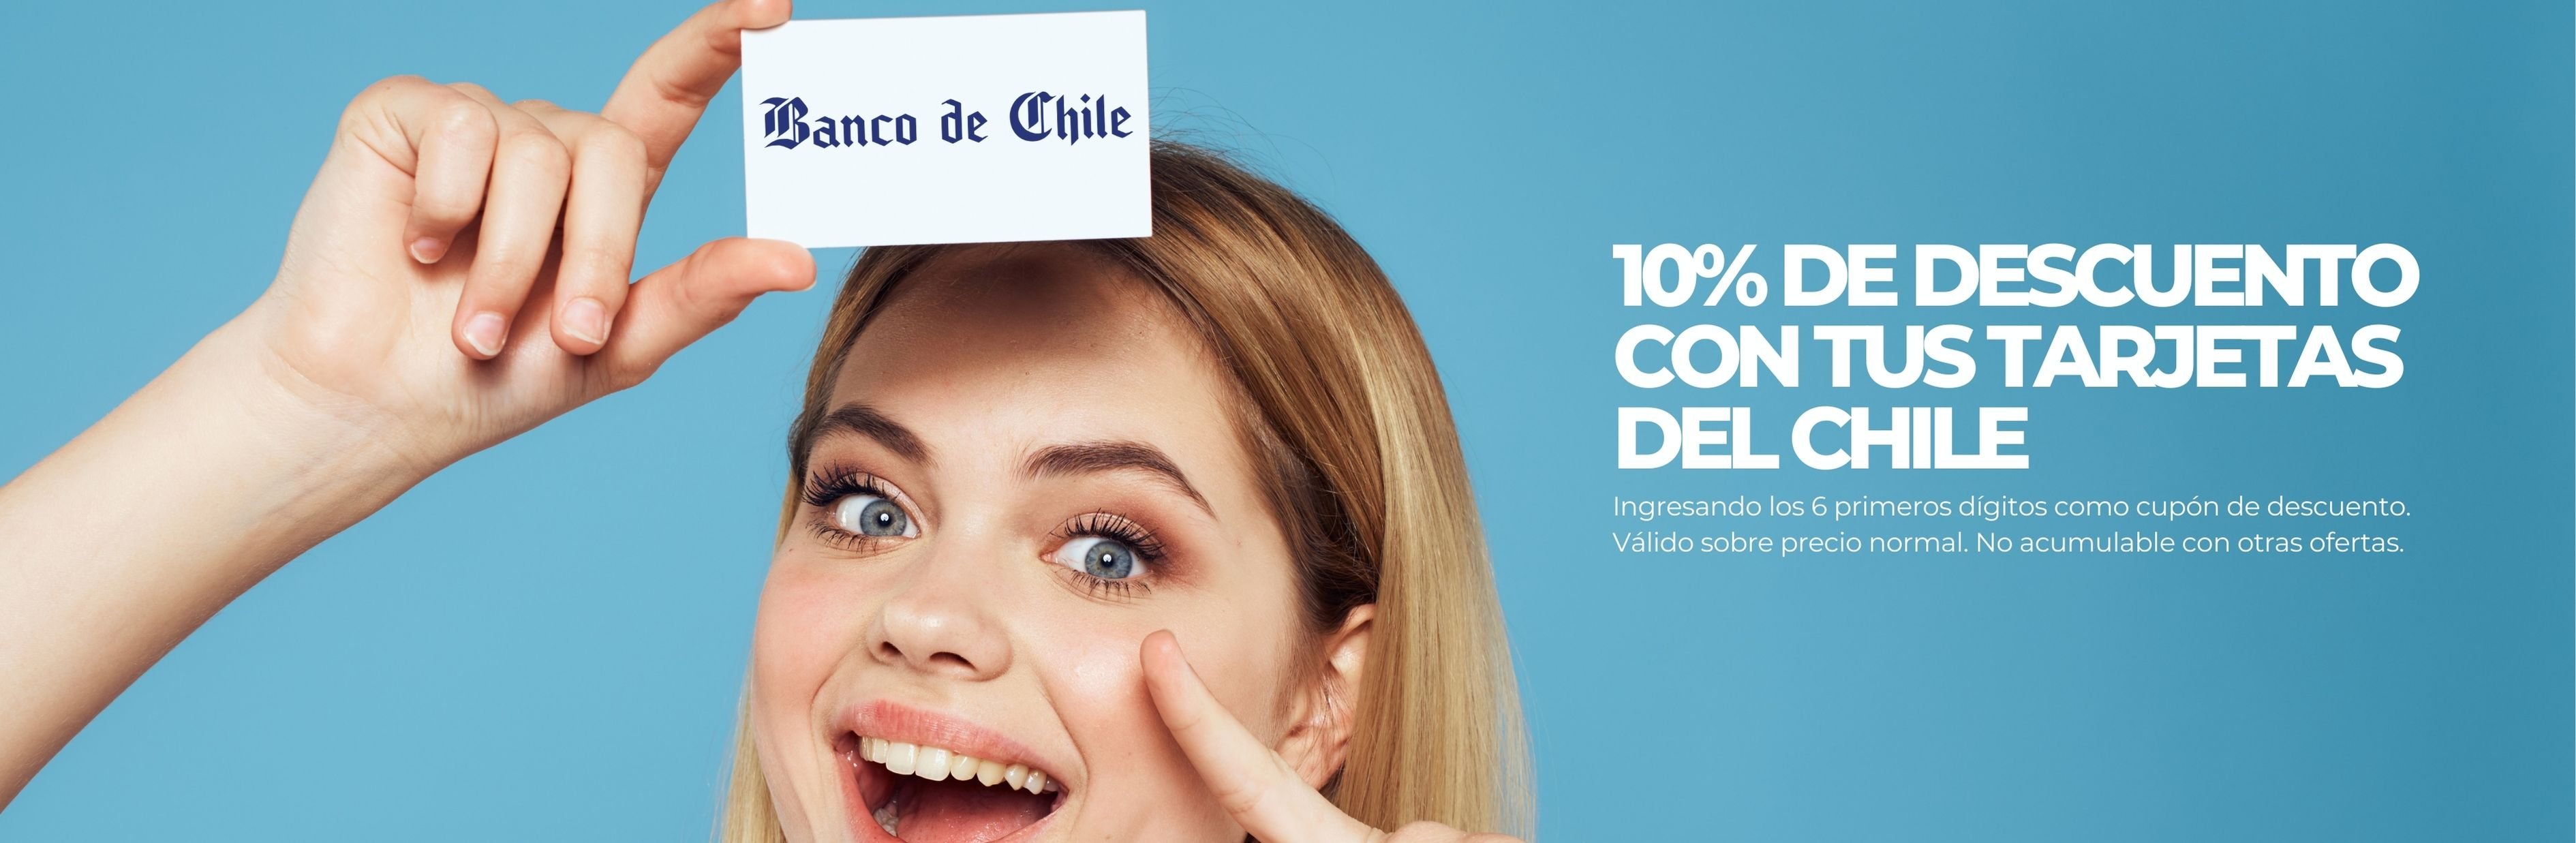 Banco_de_Chile_Tapiz.jpg